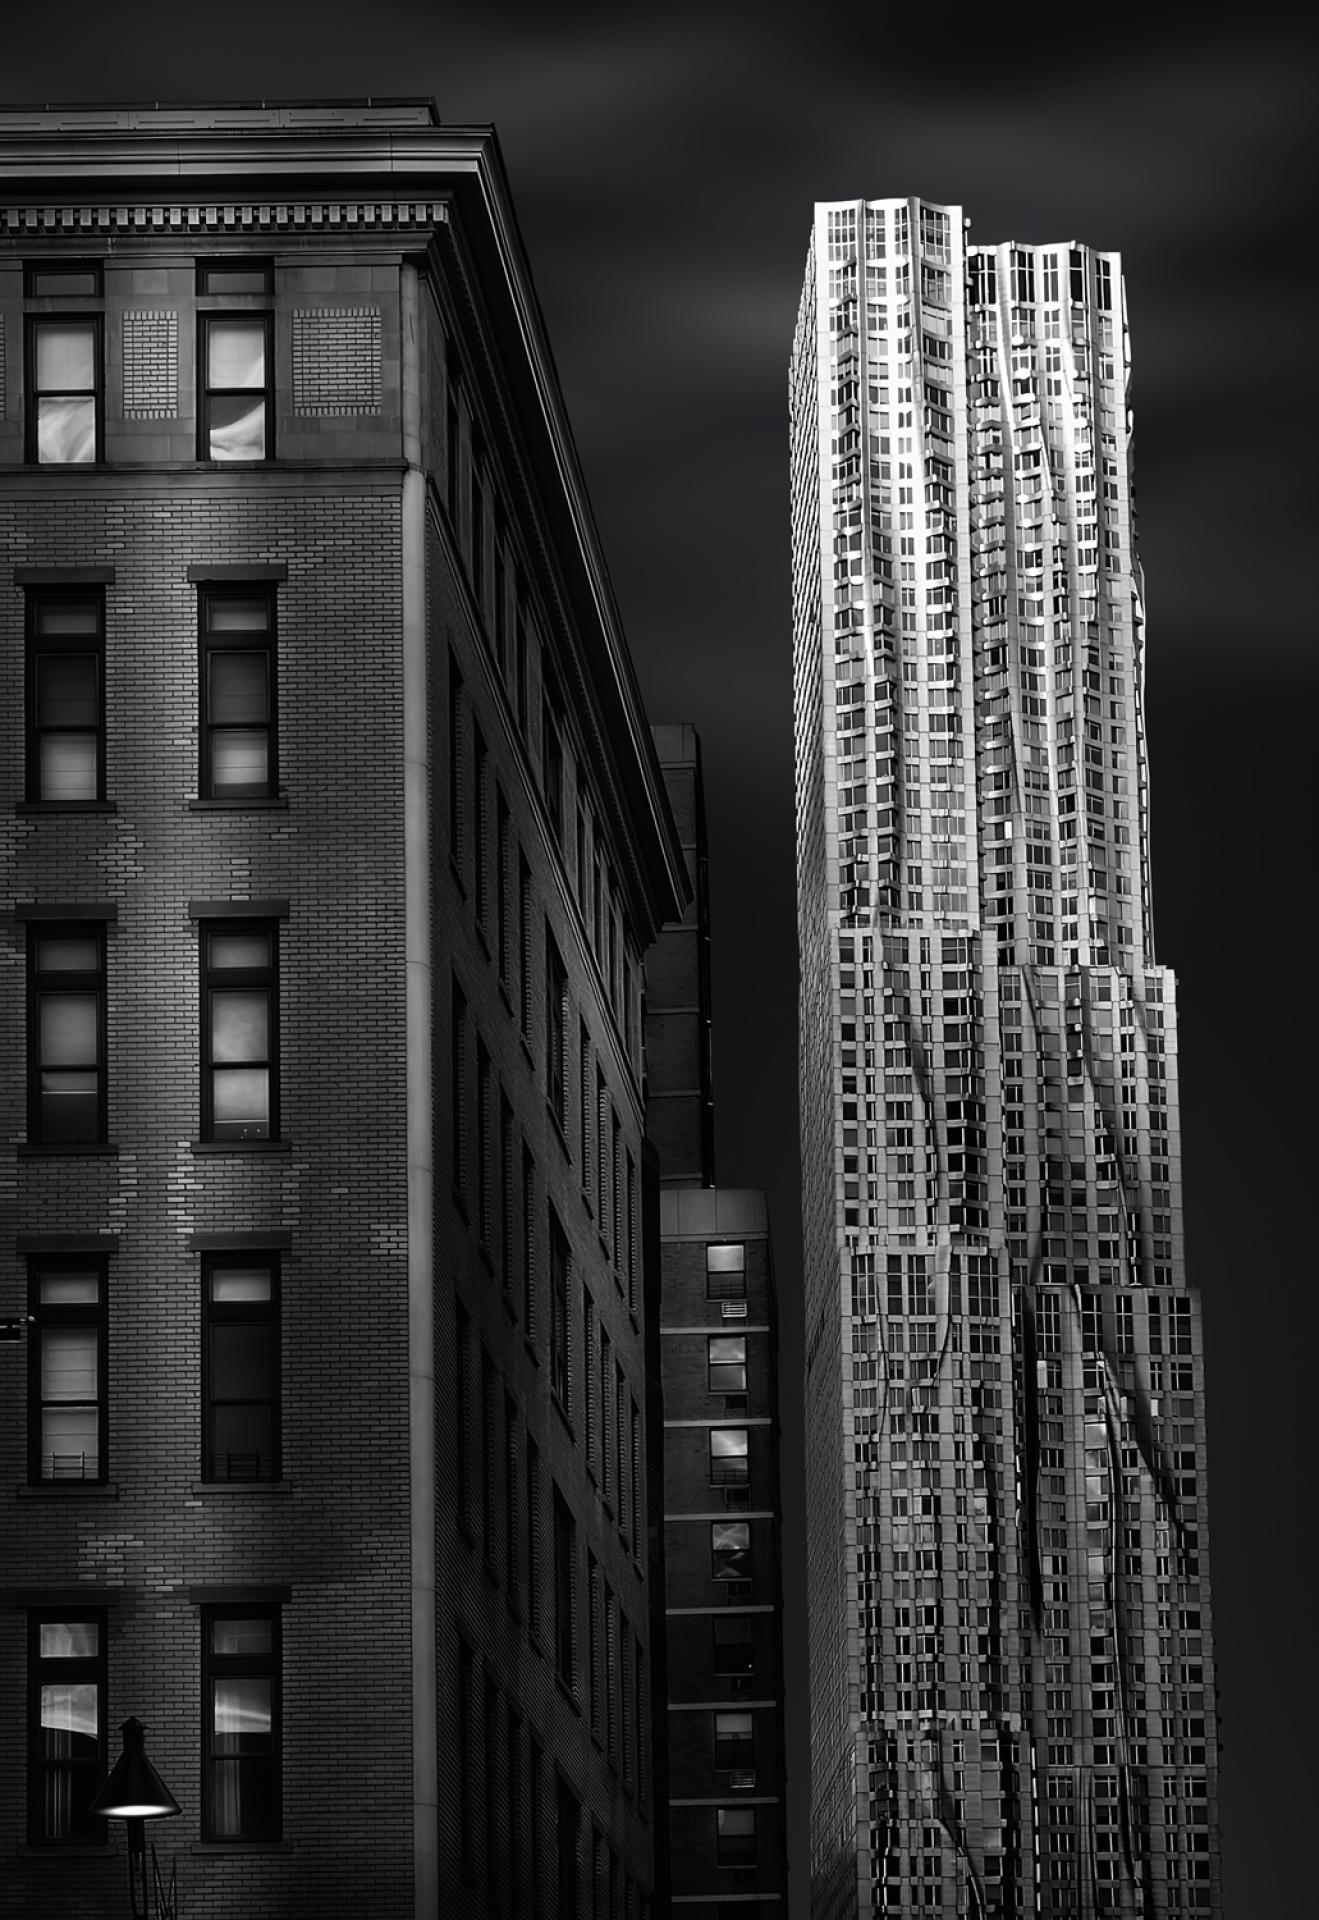 New York Photography Awards Winner - Dark world of the city that never sleeps